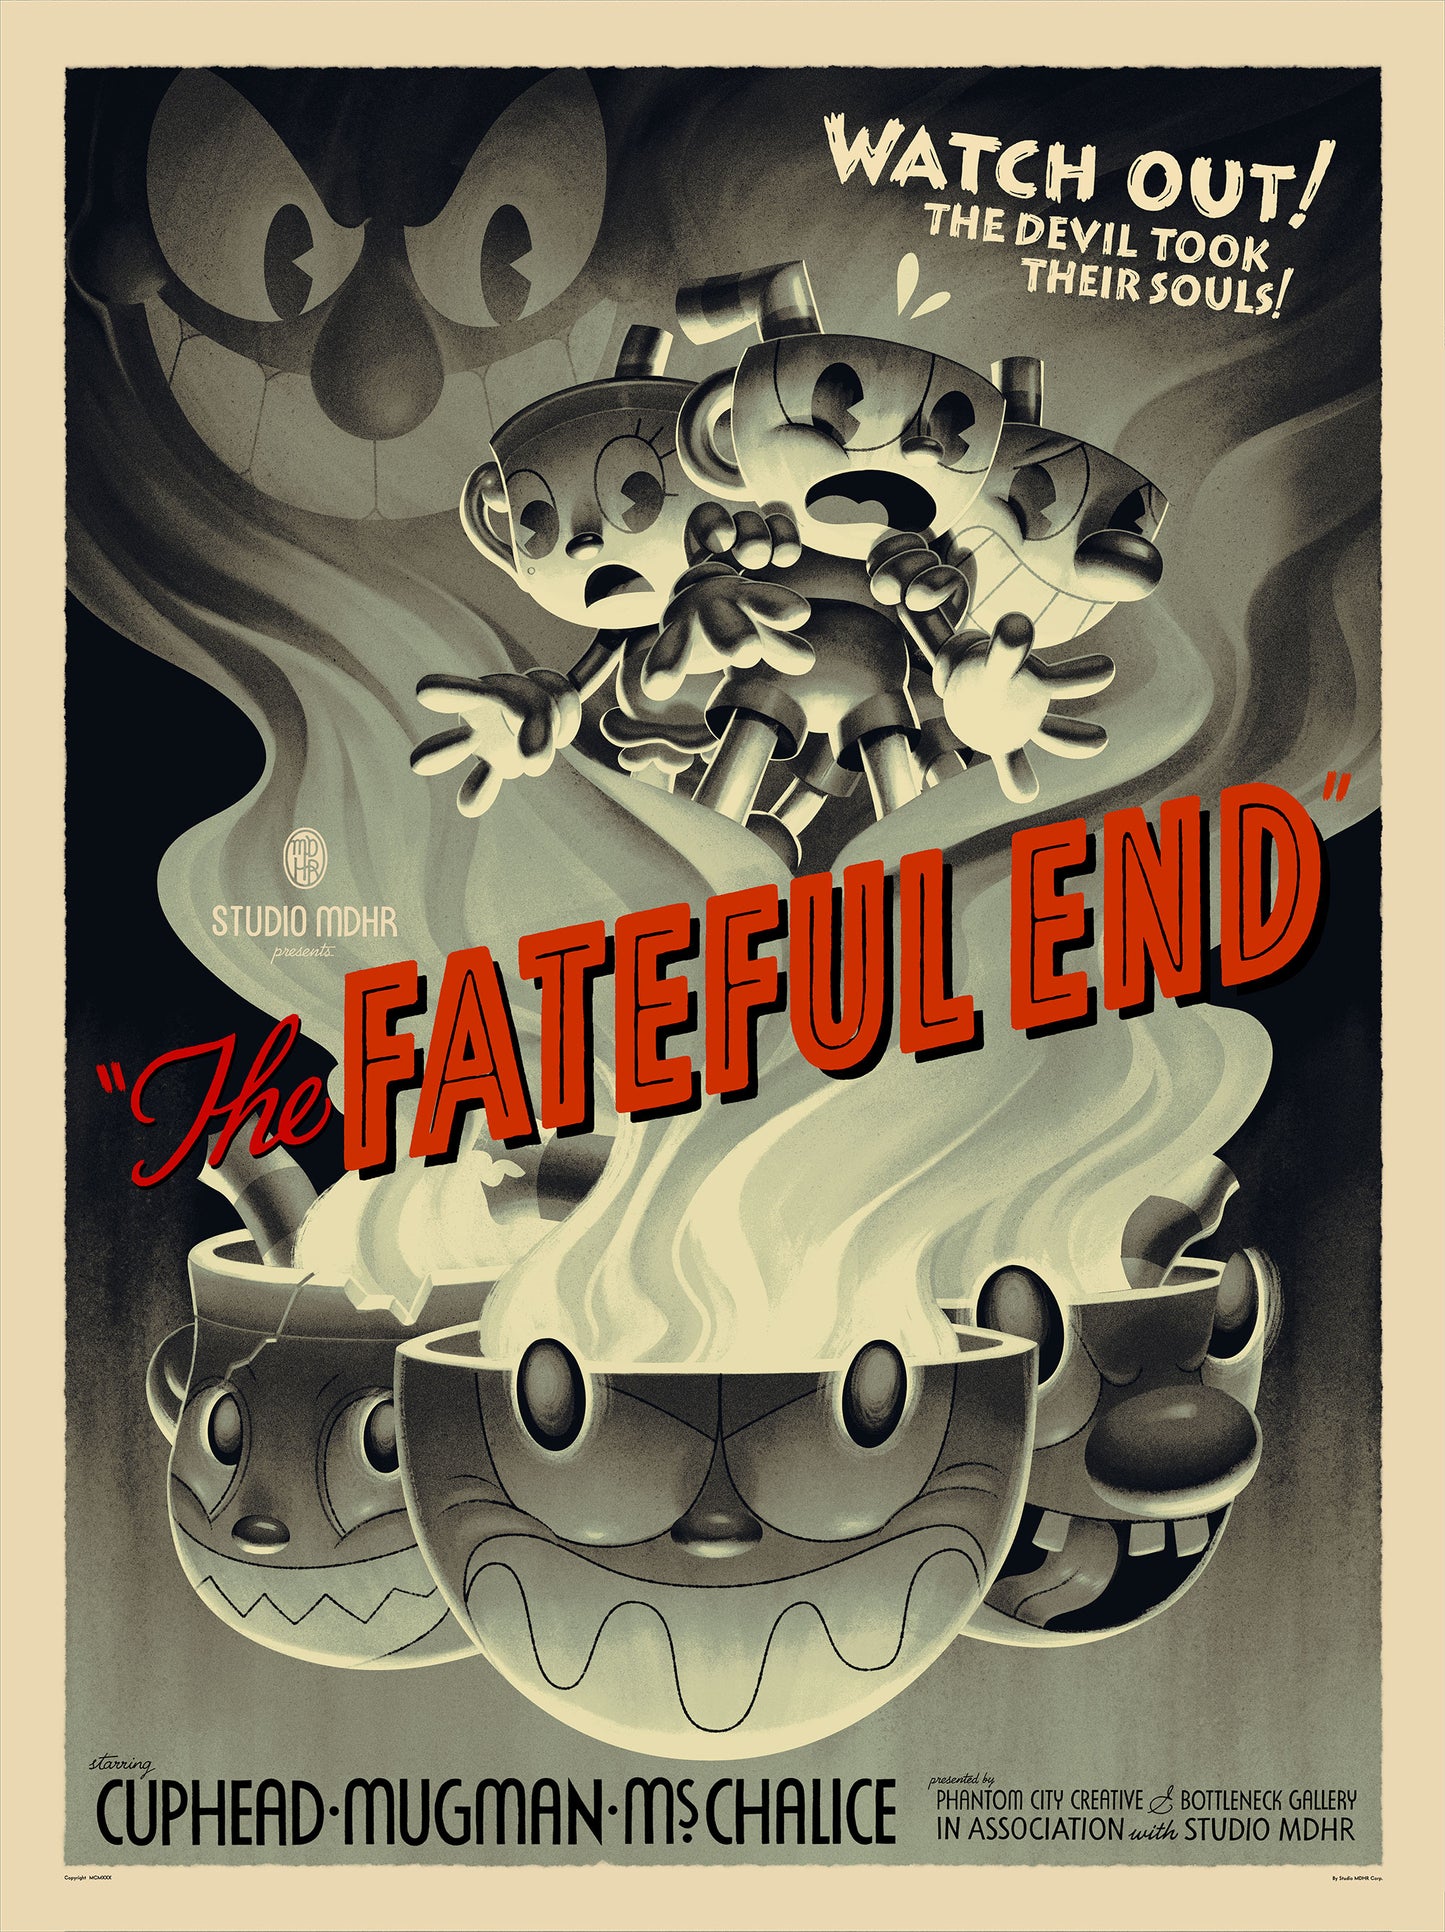 Phantom City Creative "Cuphead: The Fateful End" Variant